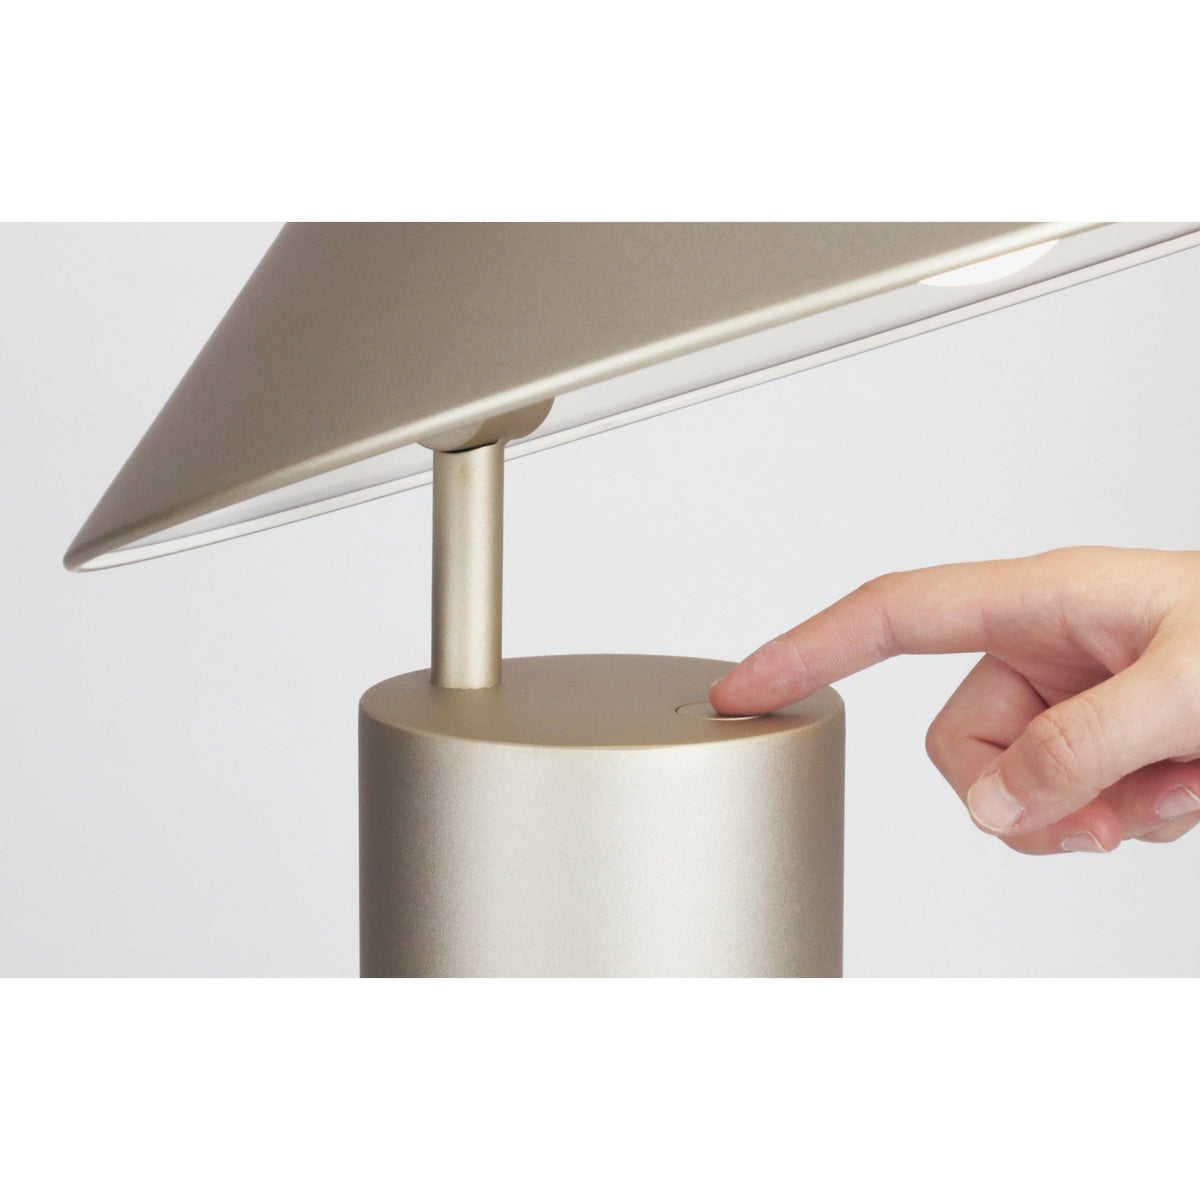 Seed Design - Damo Table Simple Lamp - SQ-339MDRS-BK | Montreal Lighting & Hardware